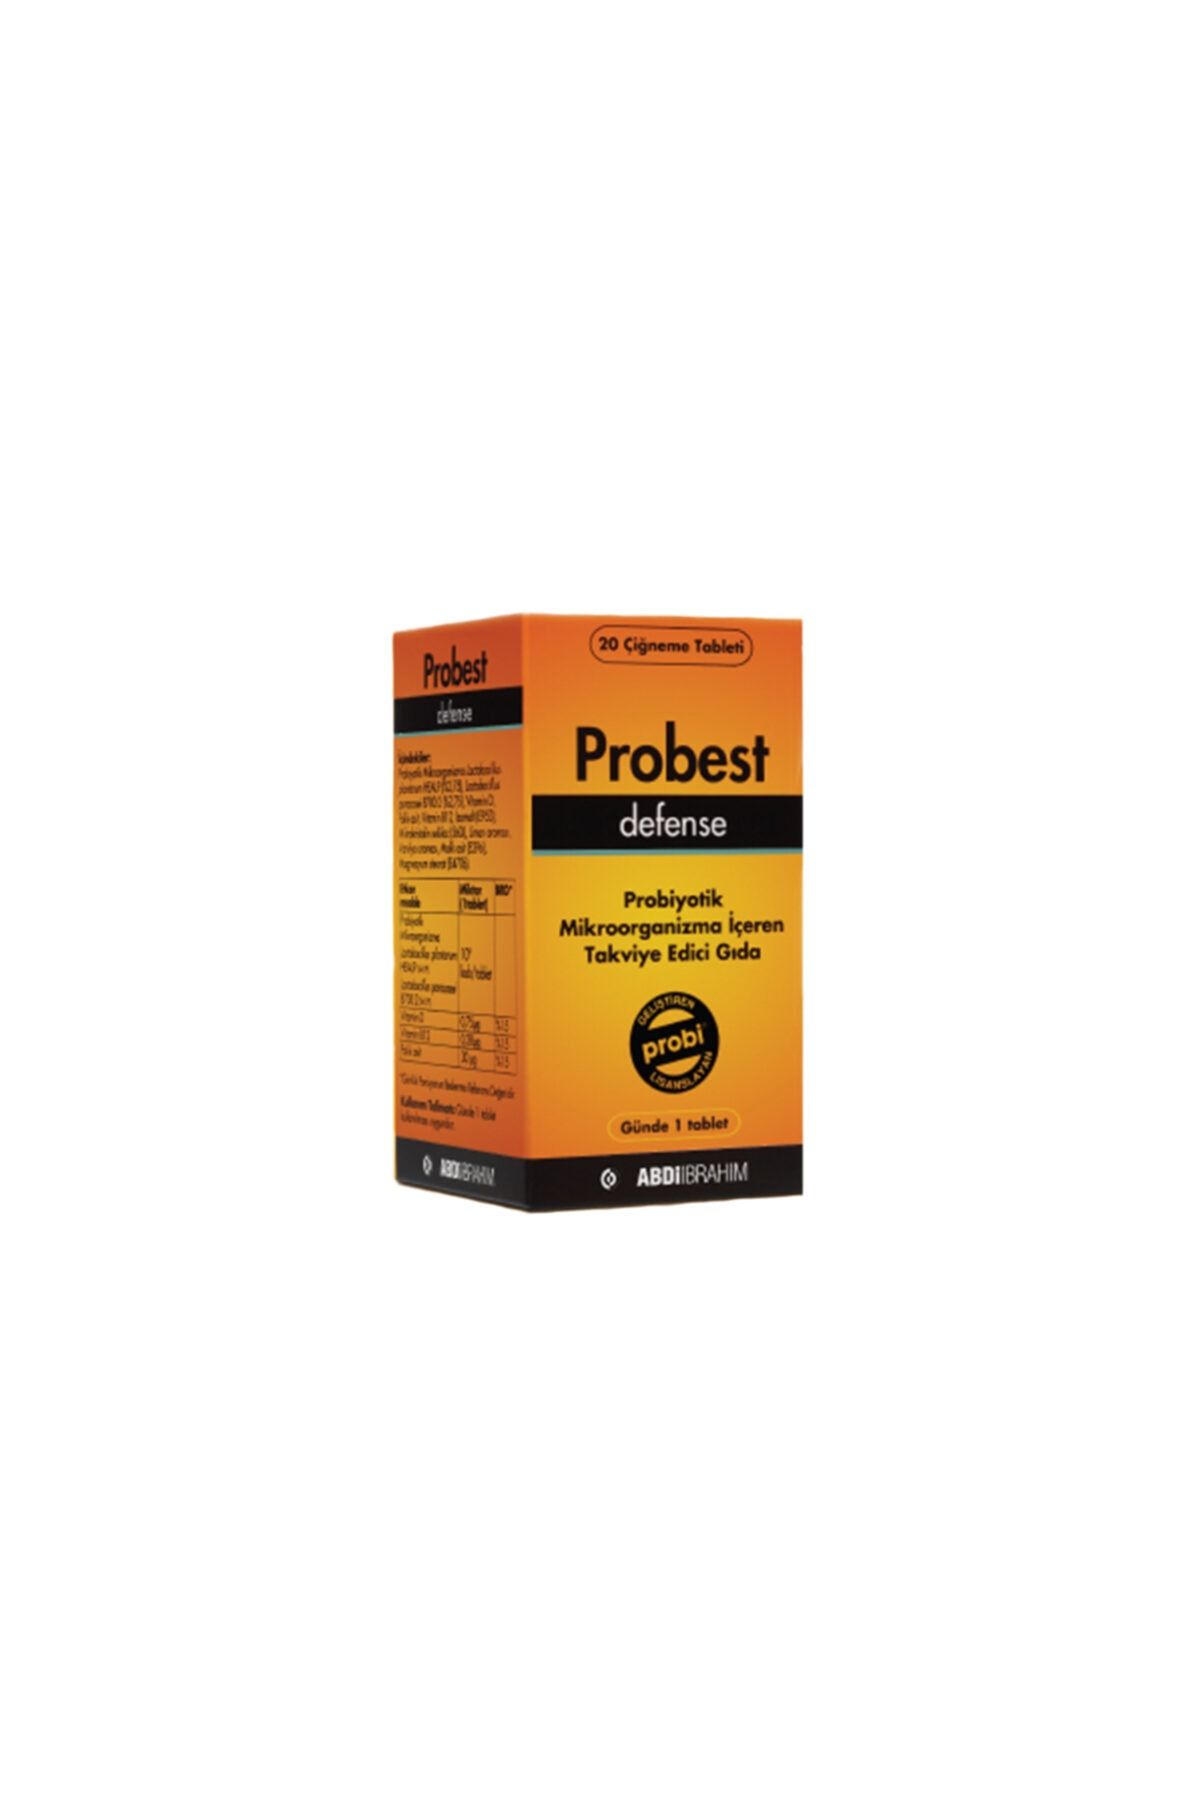 Probest Defense 20 Çiğneme Tablet